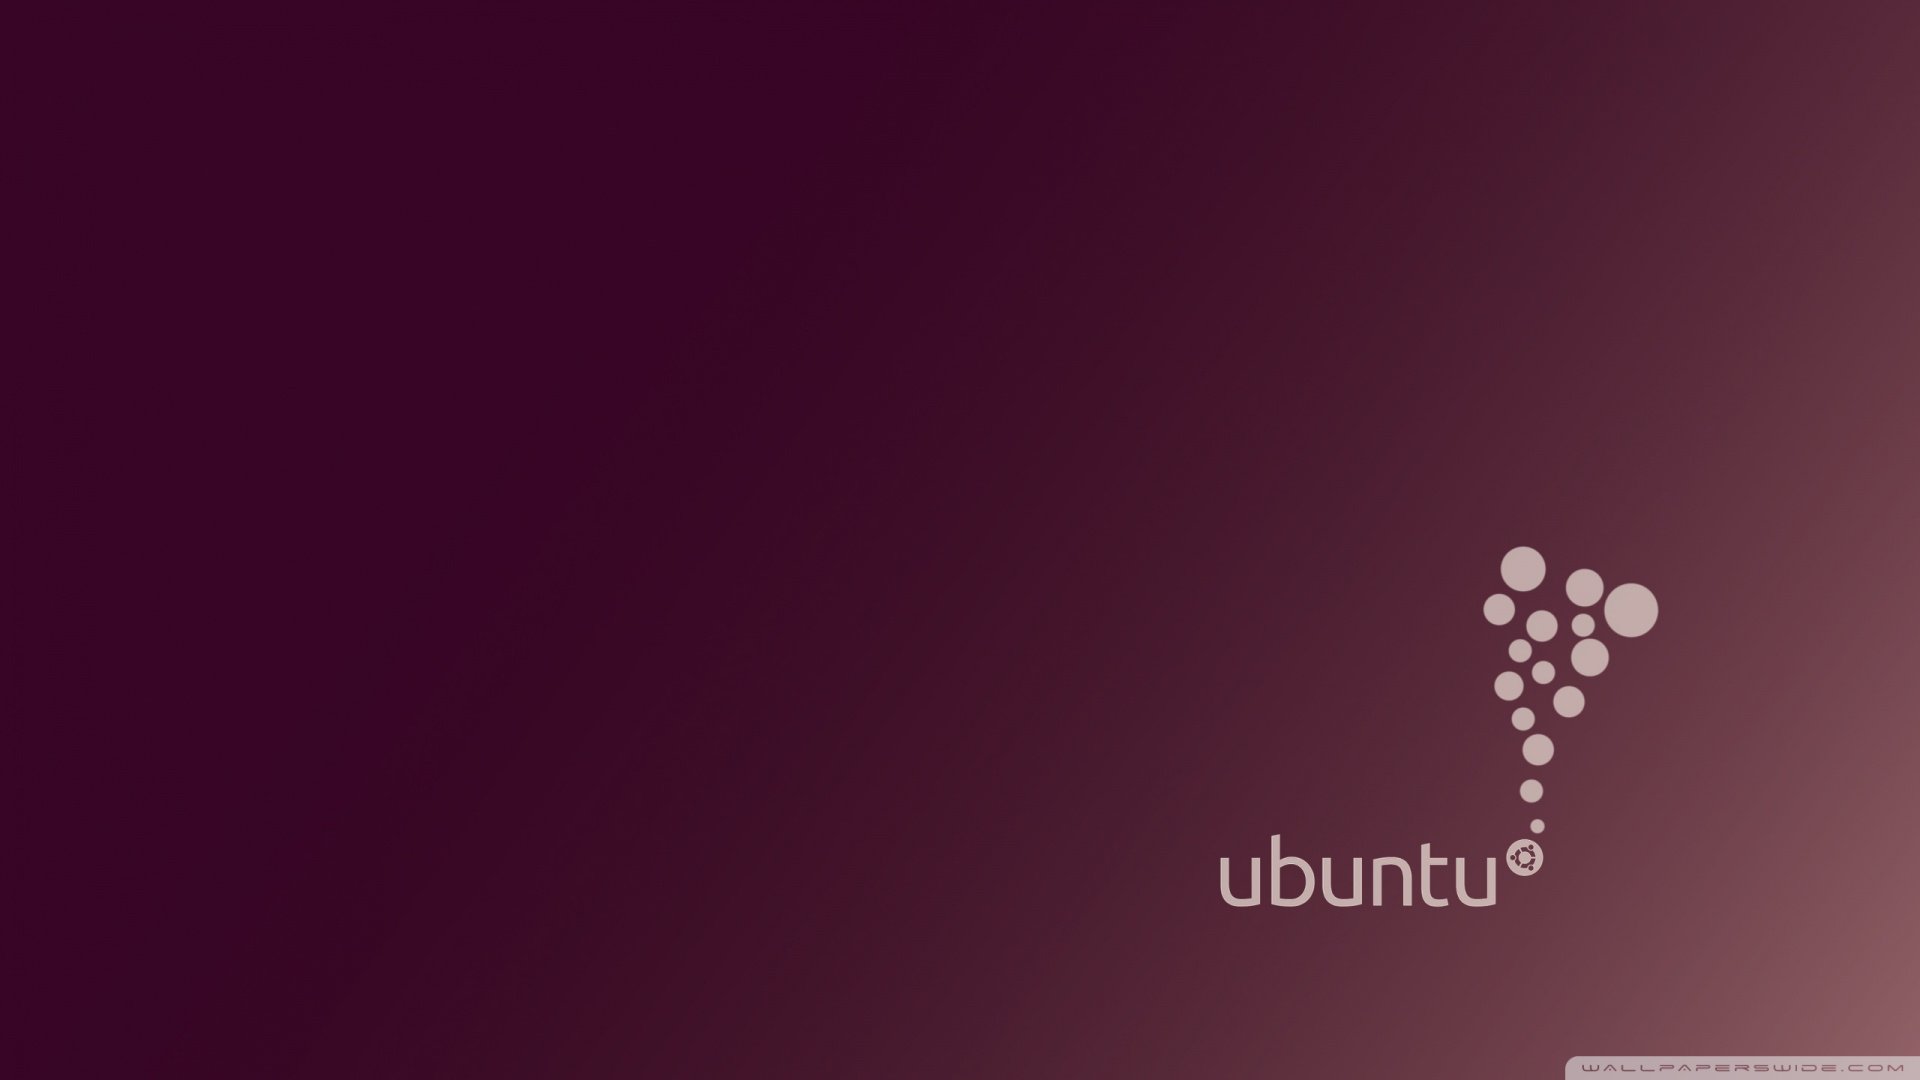 Linux Ubuntu Wallpaper 1920x1080 Linux Ubuntu 1920x1080